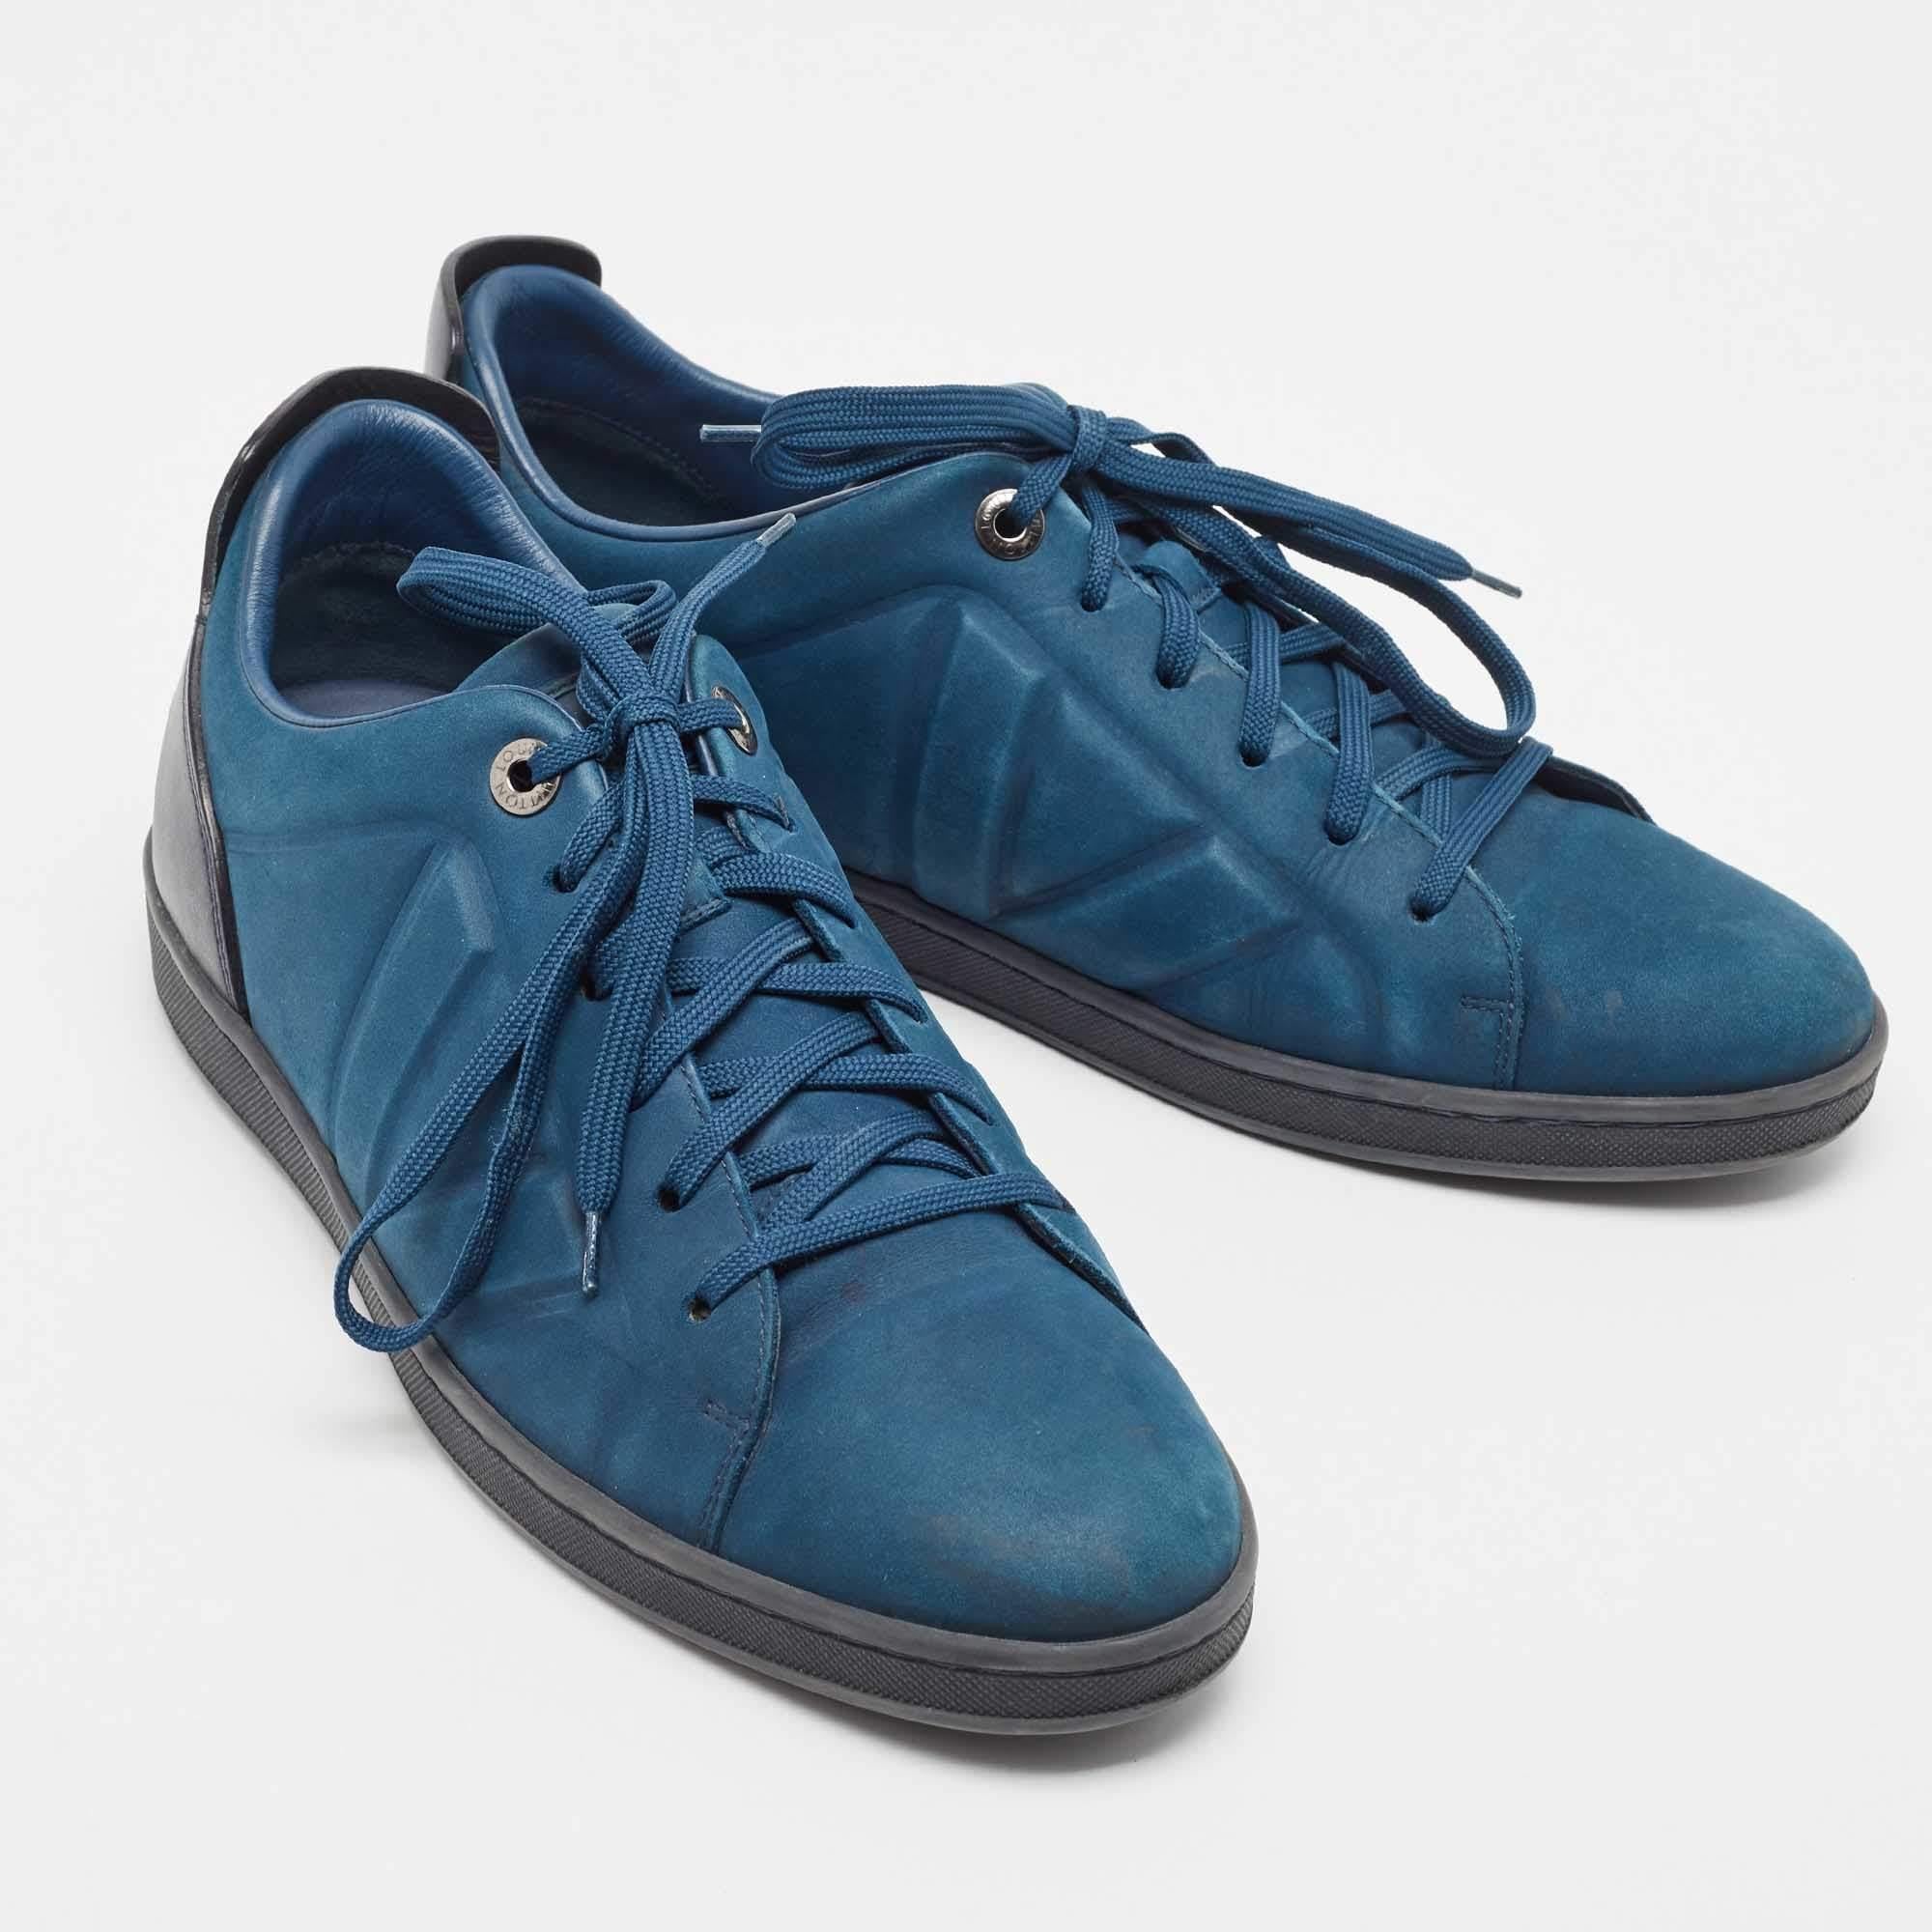 Louis Vuitton Blue Nubuck Leather Fuselage Low Top Sneakers Size 43 In Good Condition For Sale In Dubai, Al Qouz 2